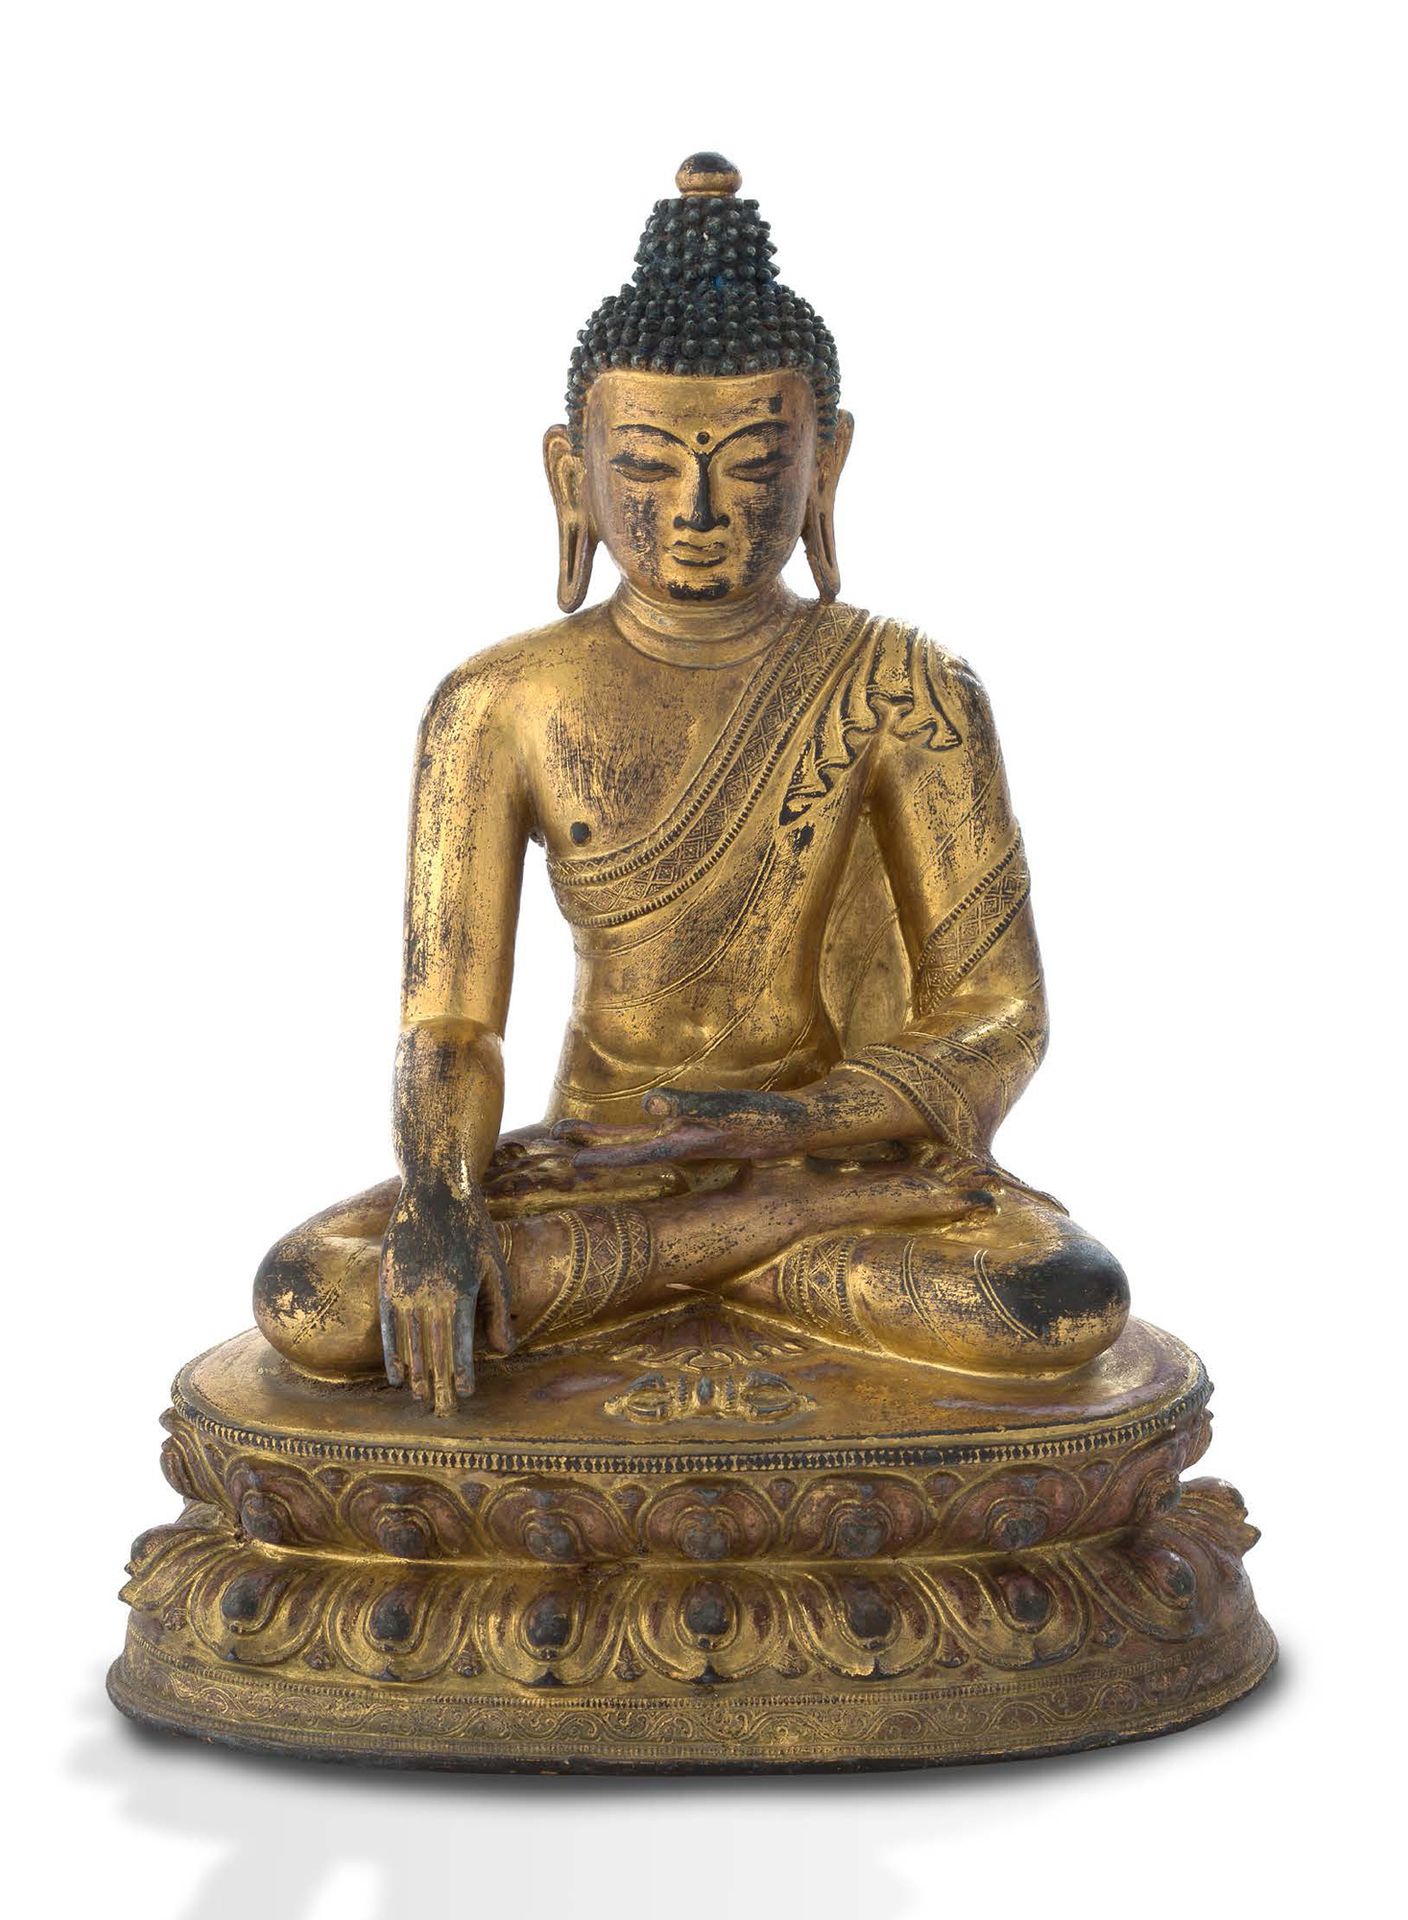 TIBET XVe SIÈCLE = 西藏地区 15世纪
释迦牟尼佛镀金铜合金雕像